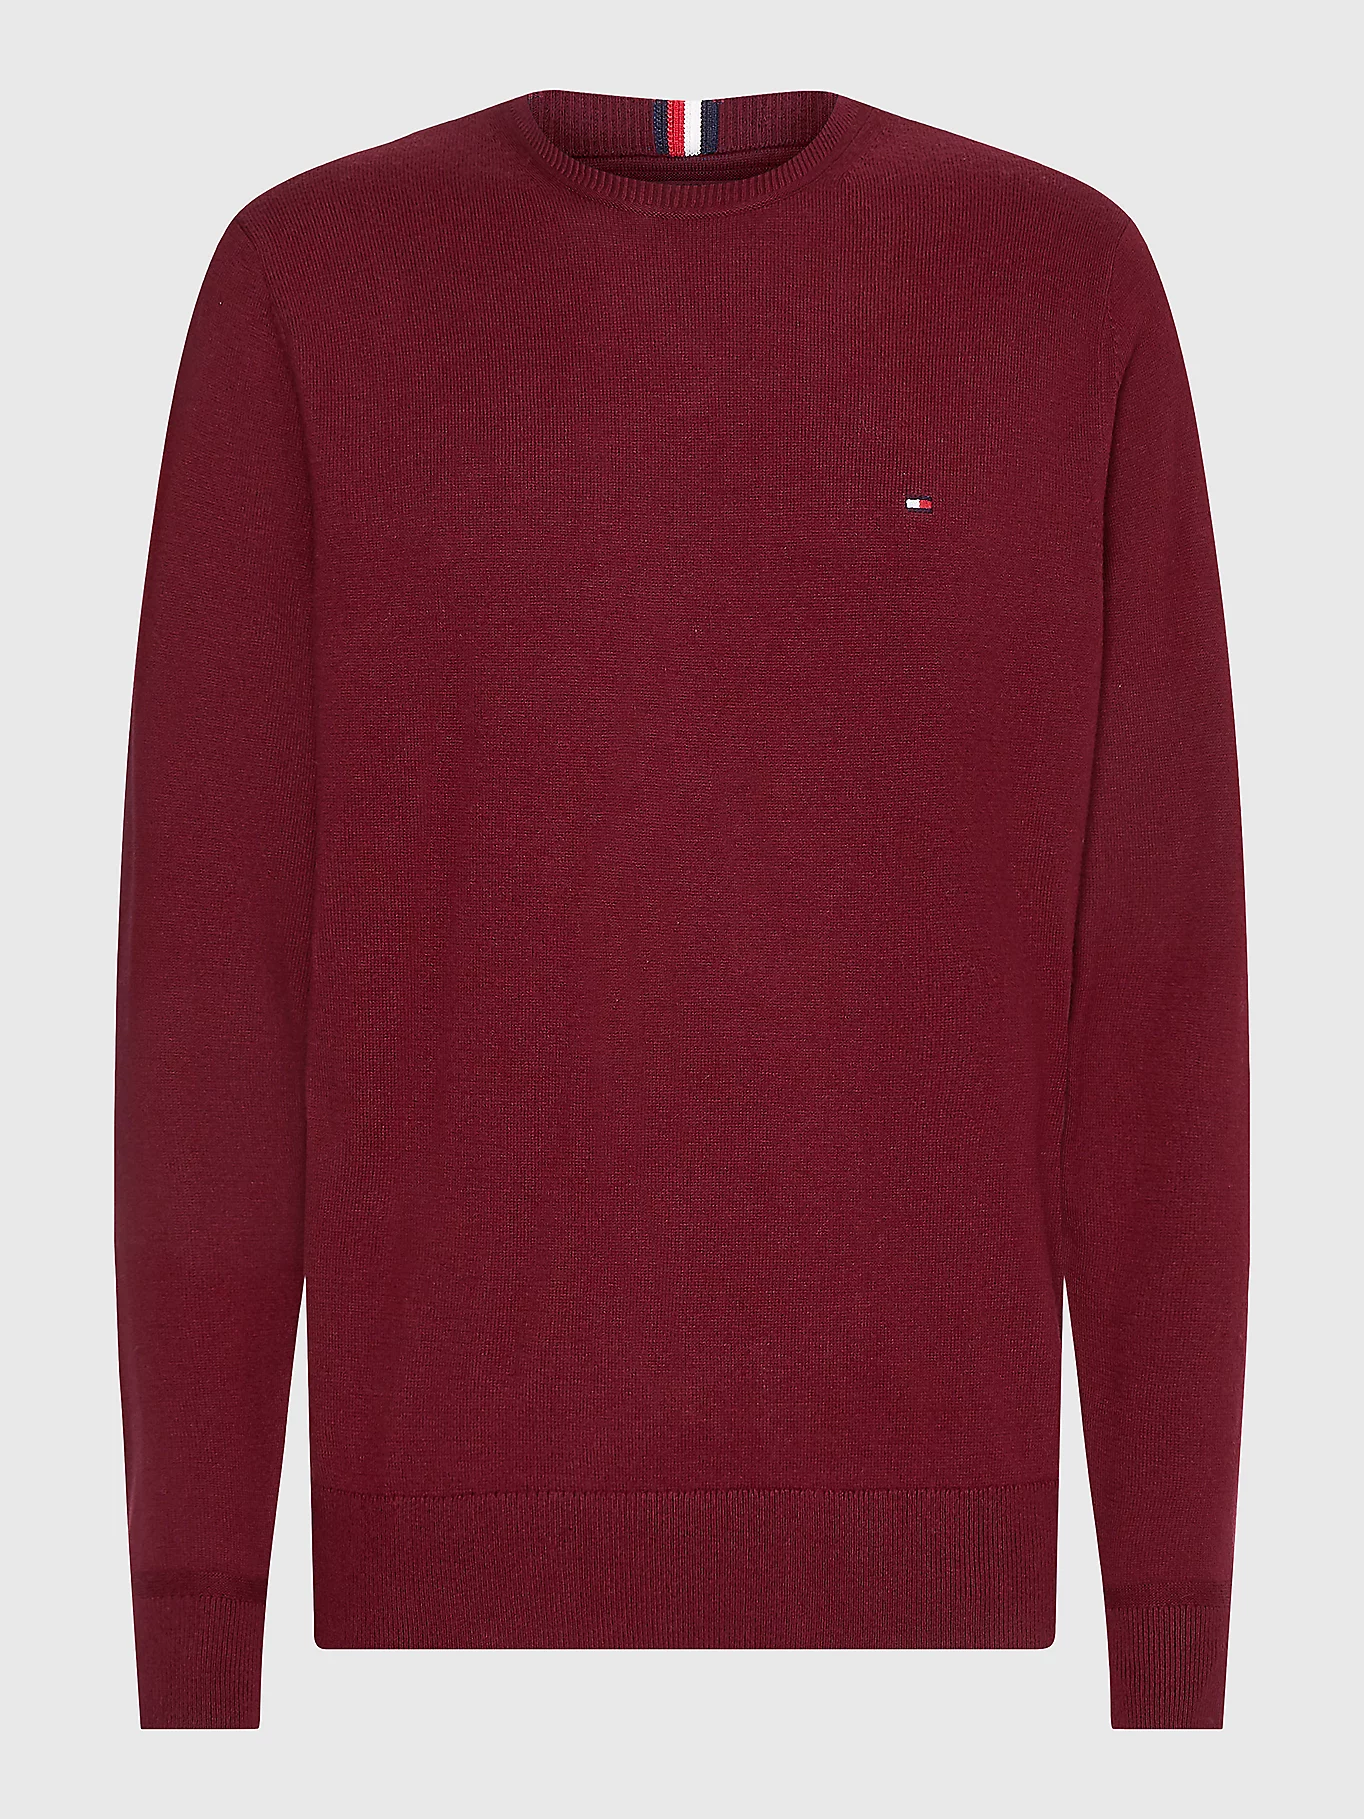 Store Cotton Pima Fashion Tommy Sweater Scandinavian Rouge - Cashmere Buy Deep Hilfiger